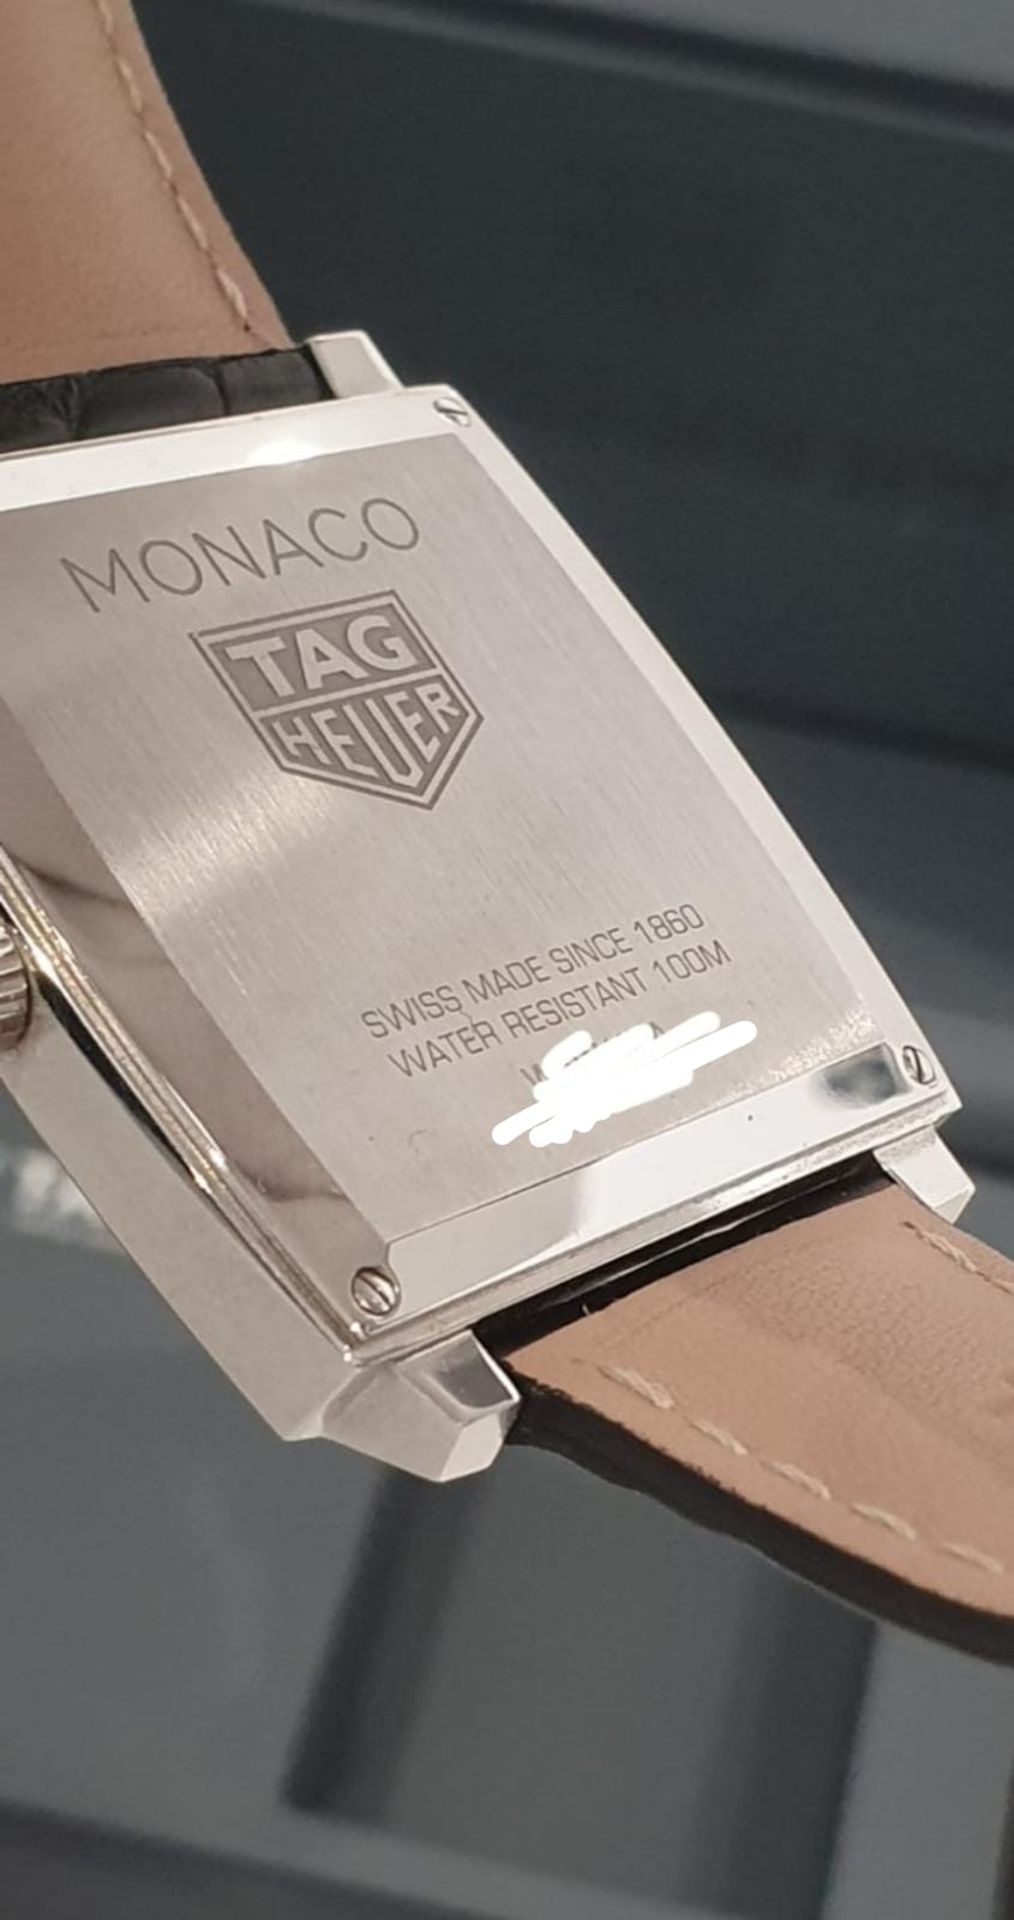 TAG HEUER MONACO MENS BLACK WATCH WITH BOX & GUARANTEE CARD NO VAT - Image 6 of 10